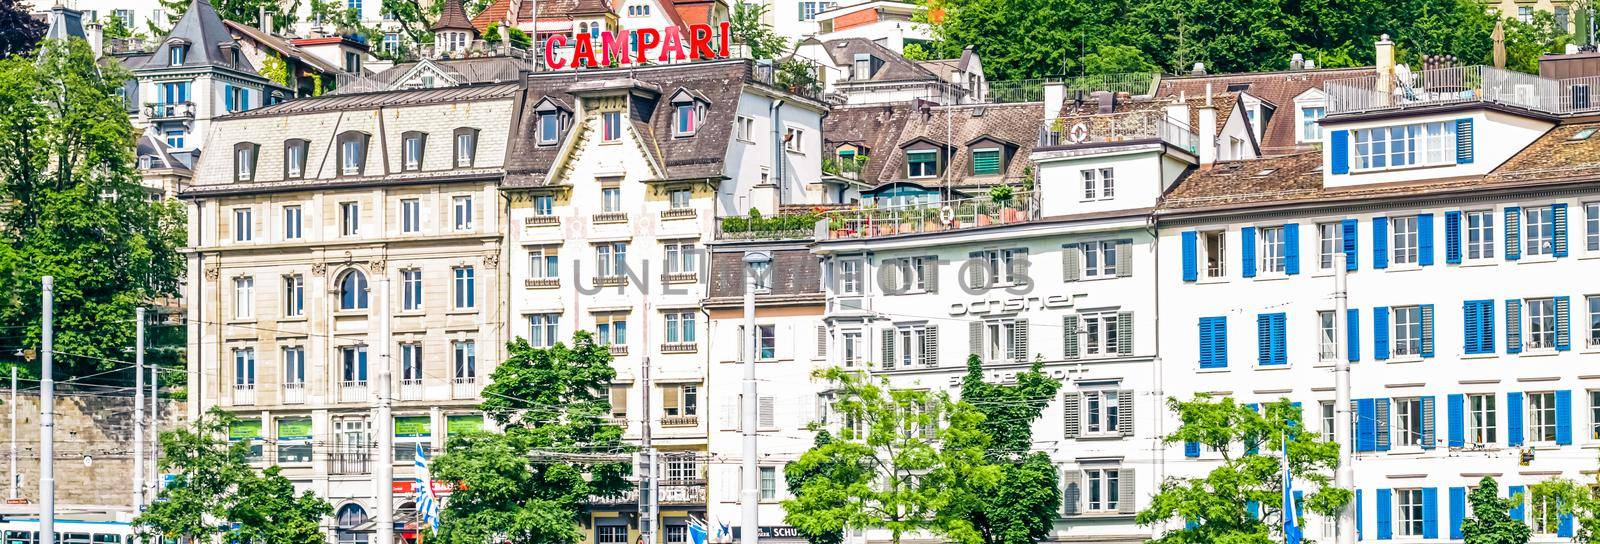 Streets and historic Old Town buildings near main railway train station Zurich HB, Hauptbahnhof, Swiss architecture and travel destination in Zurich, Switzerland by Anneleven